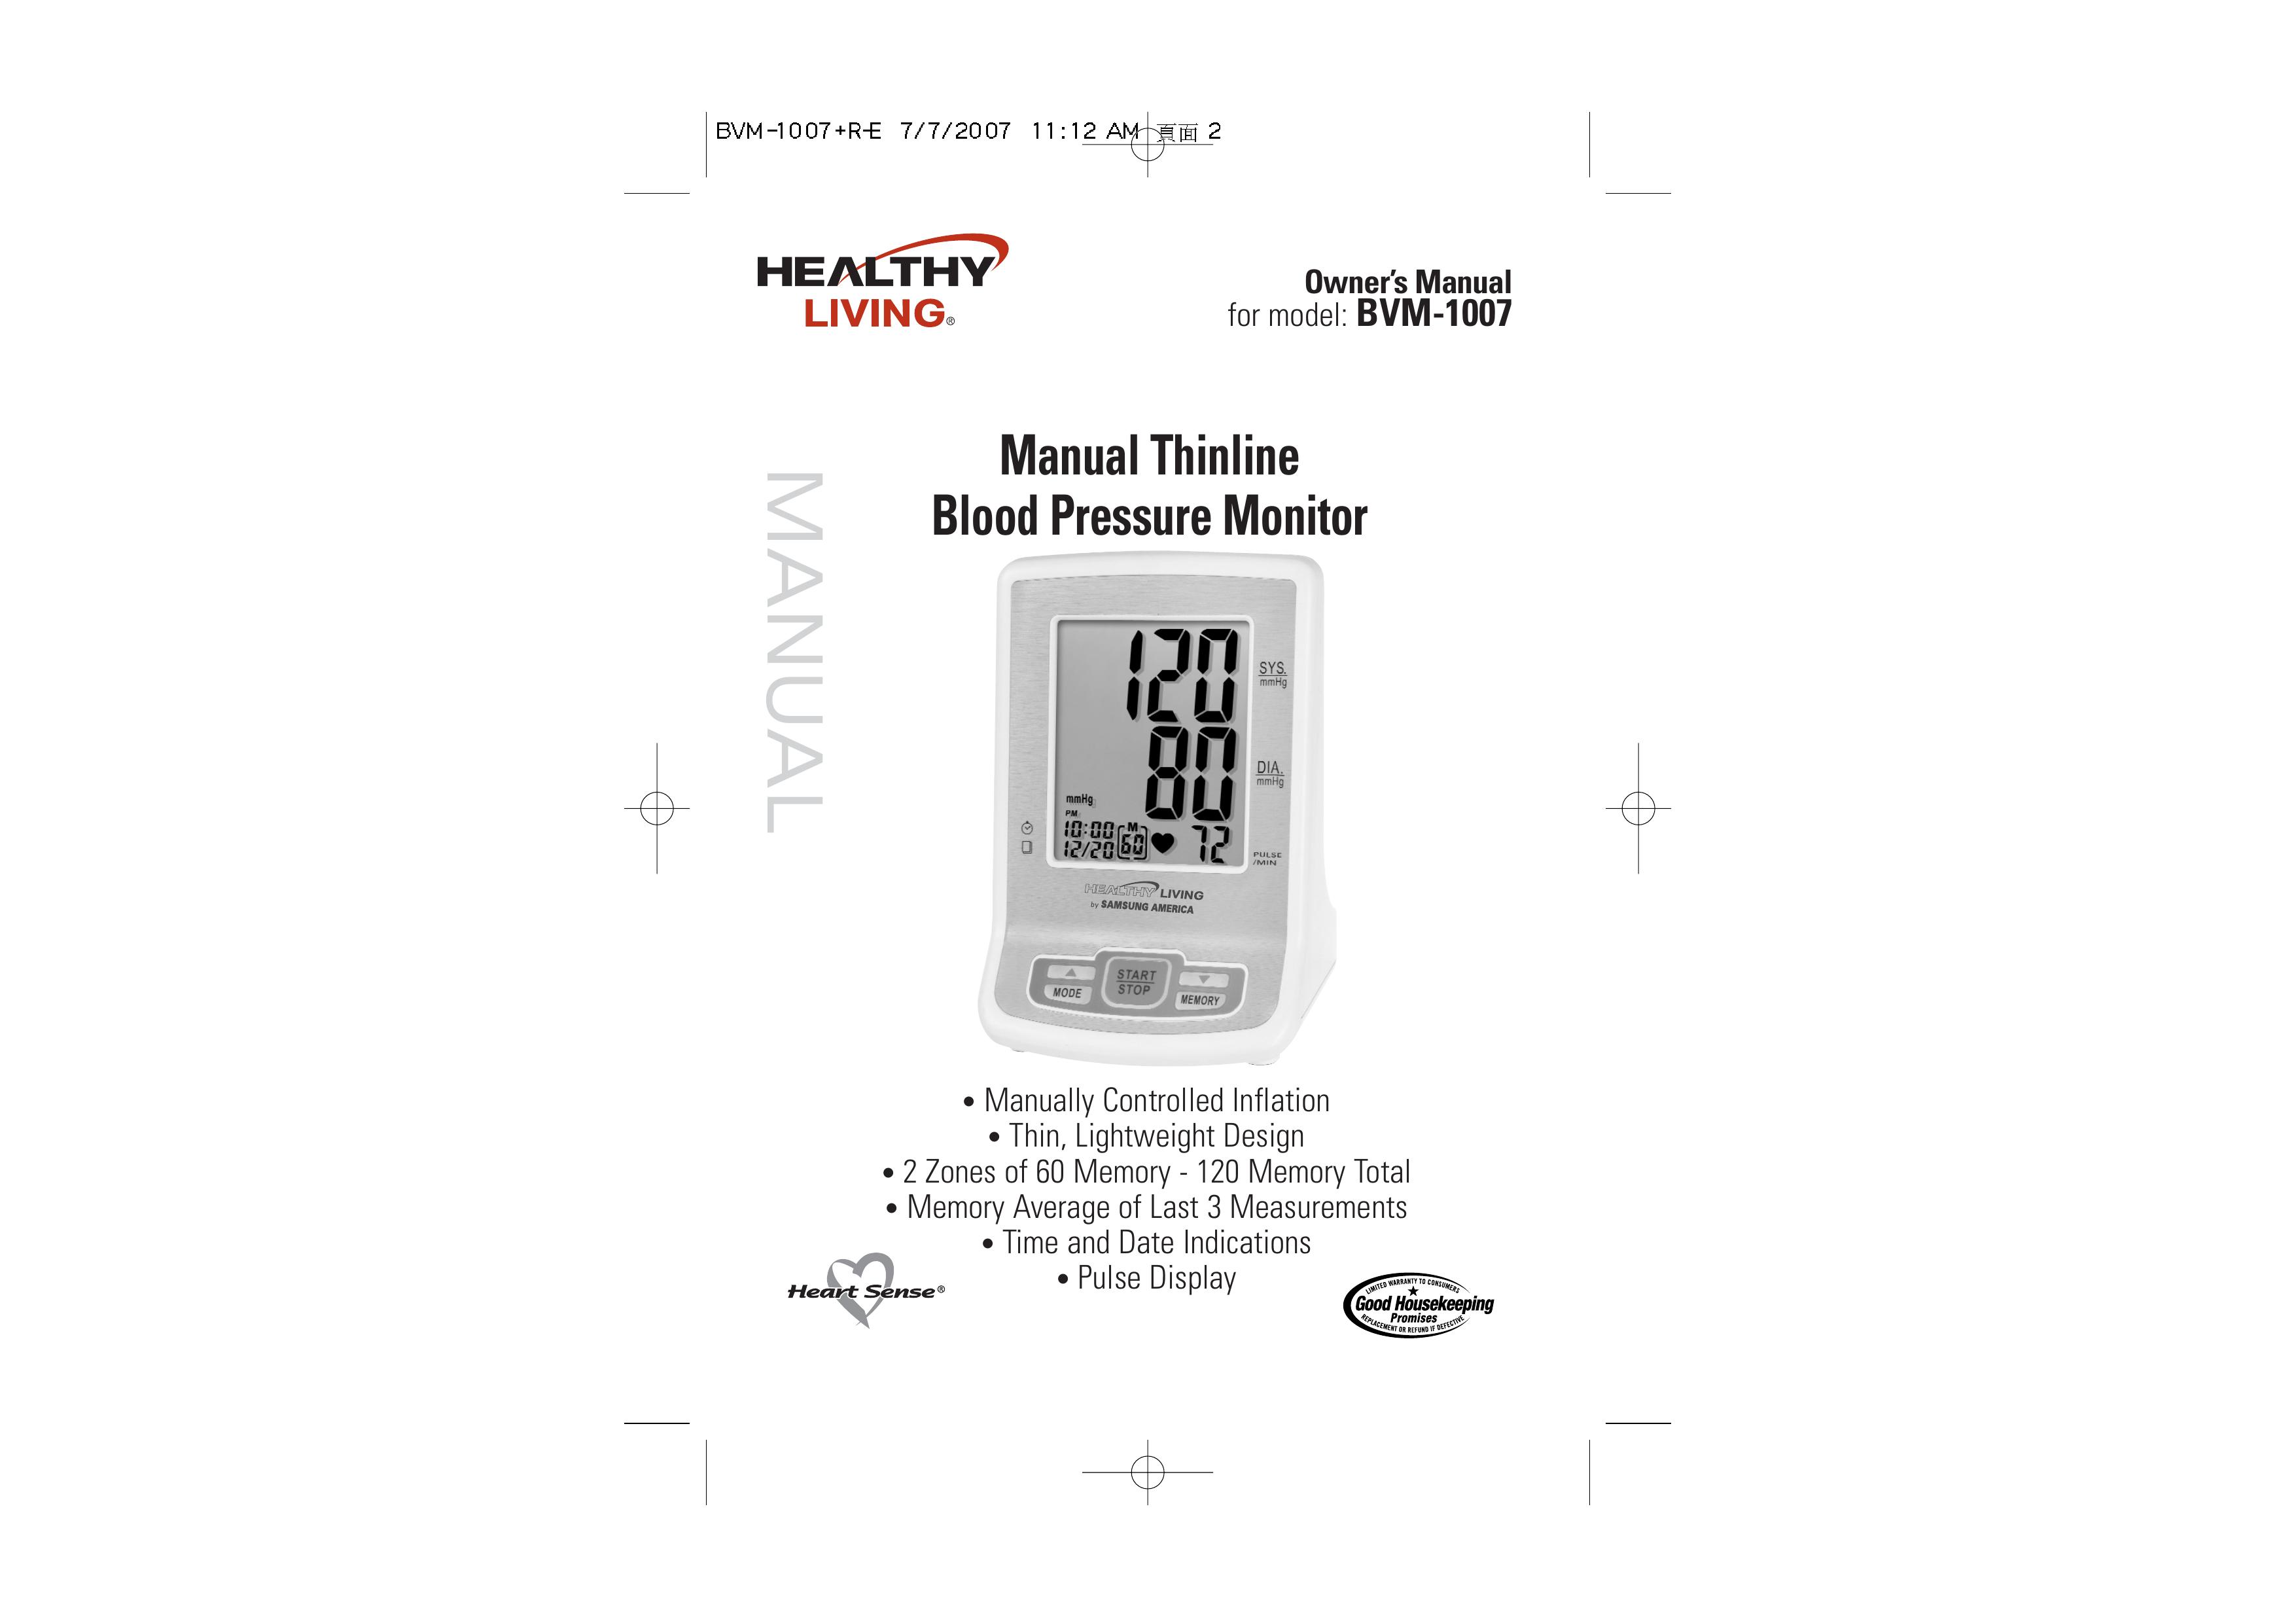 Samsung BVM-1007 Blood Pressure Monitor User Manual